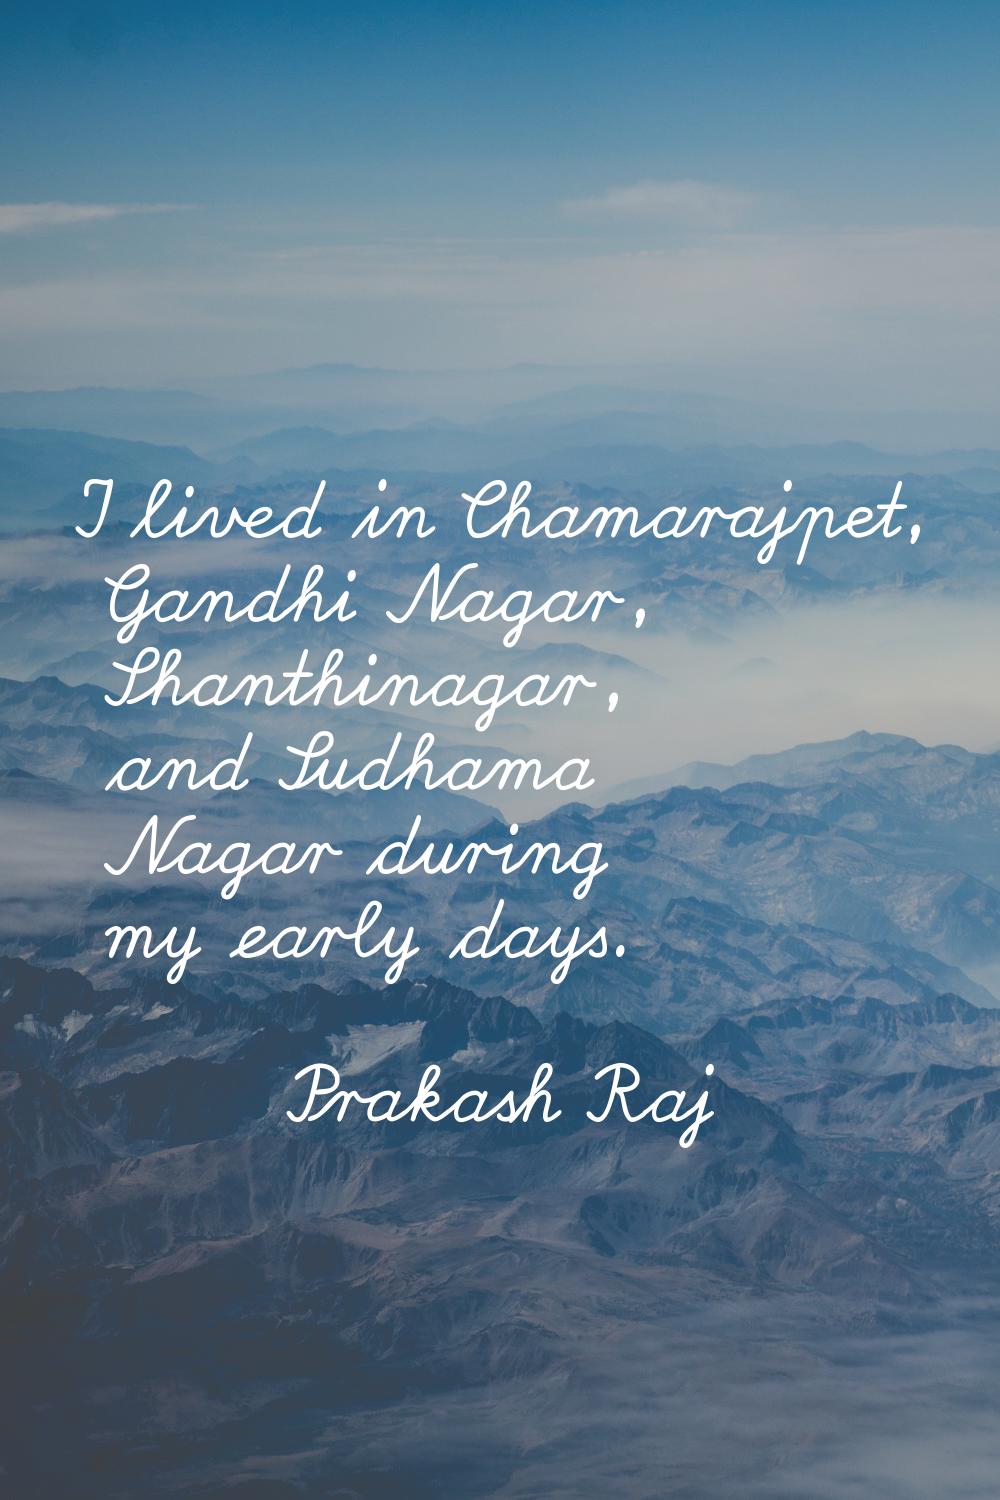 I lived in Chamarajpet, Gandhi Nagar, Shanthinagar, and Sudhama Nagar during my early days.